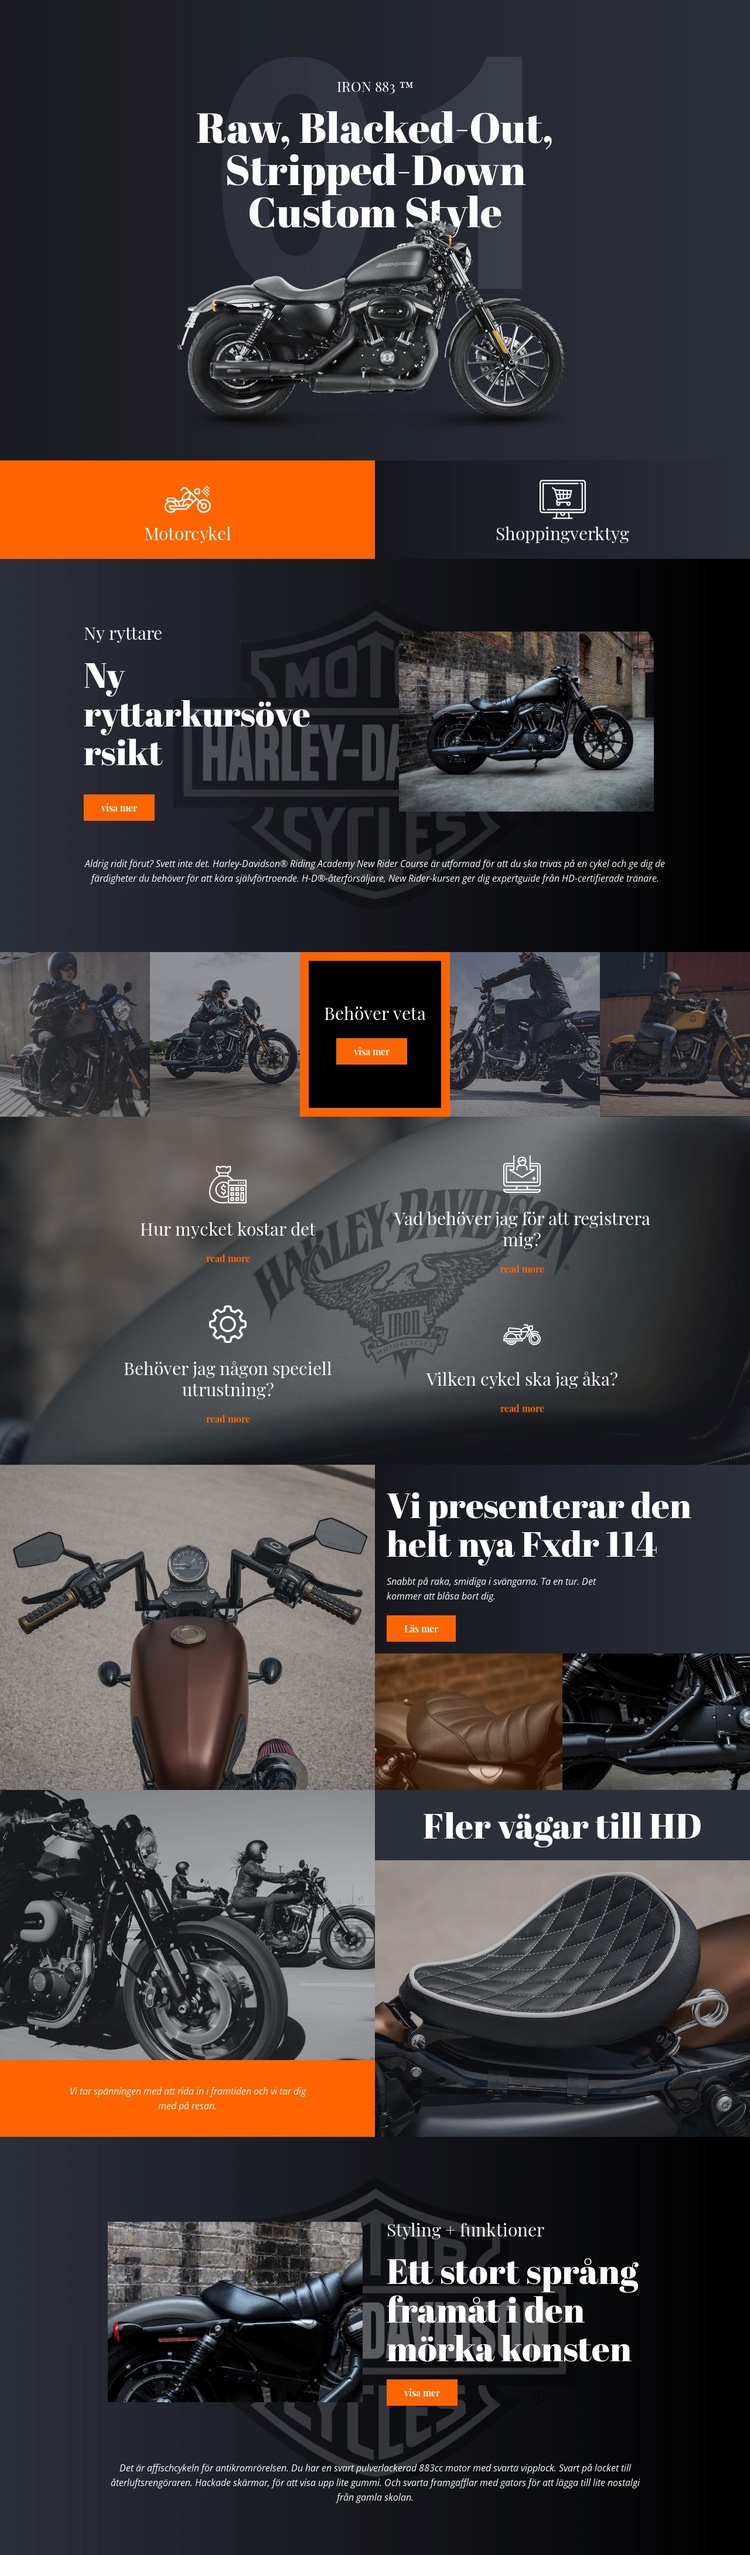 Harley Davidson WordPress -tema